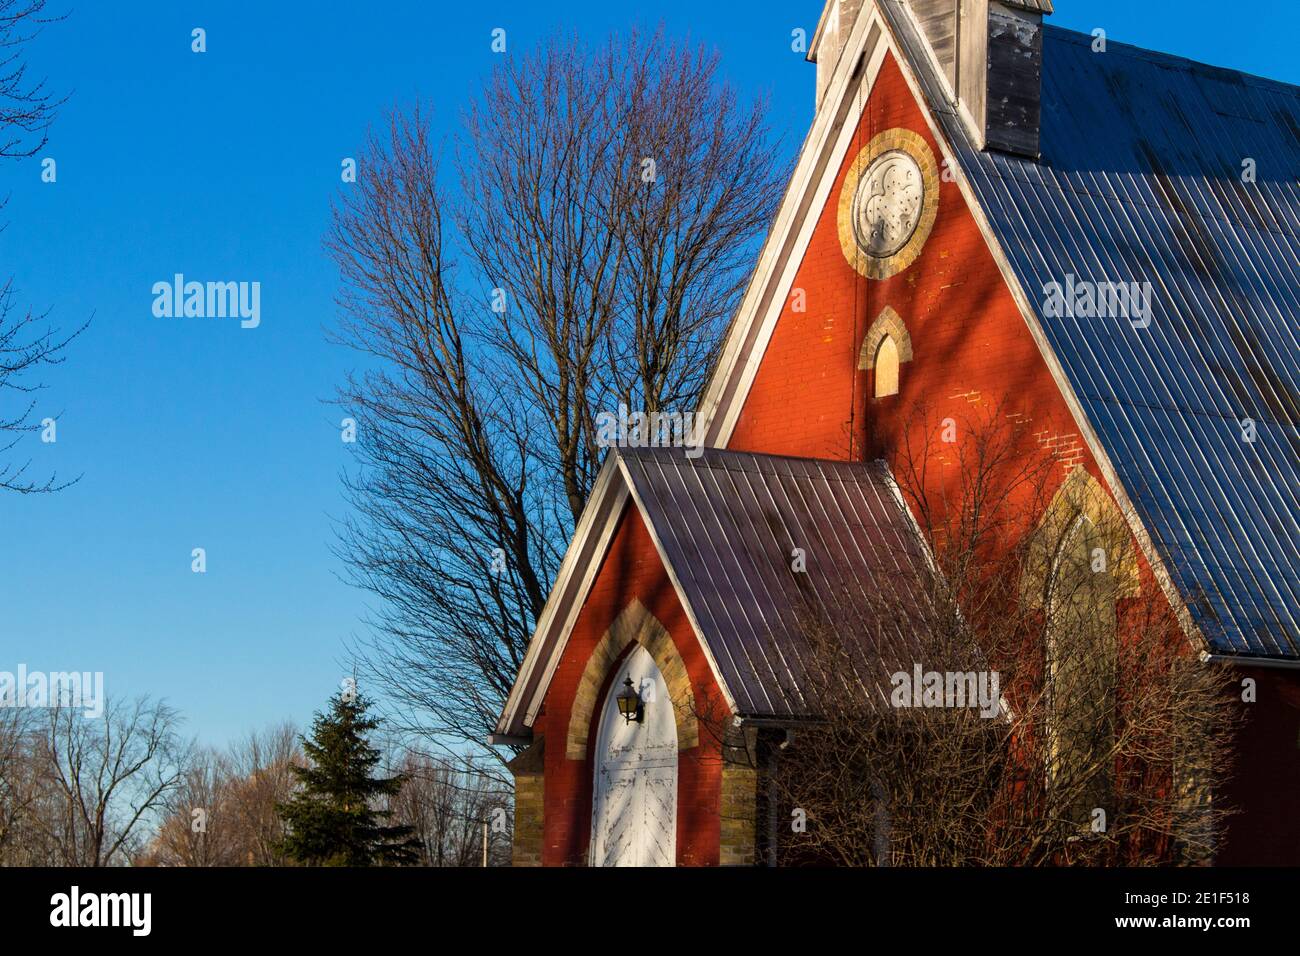 Red church building in rural Ottawa area Stock Photo